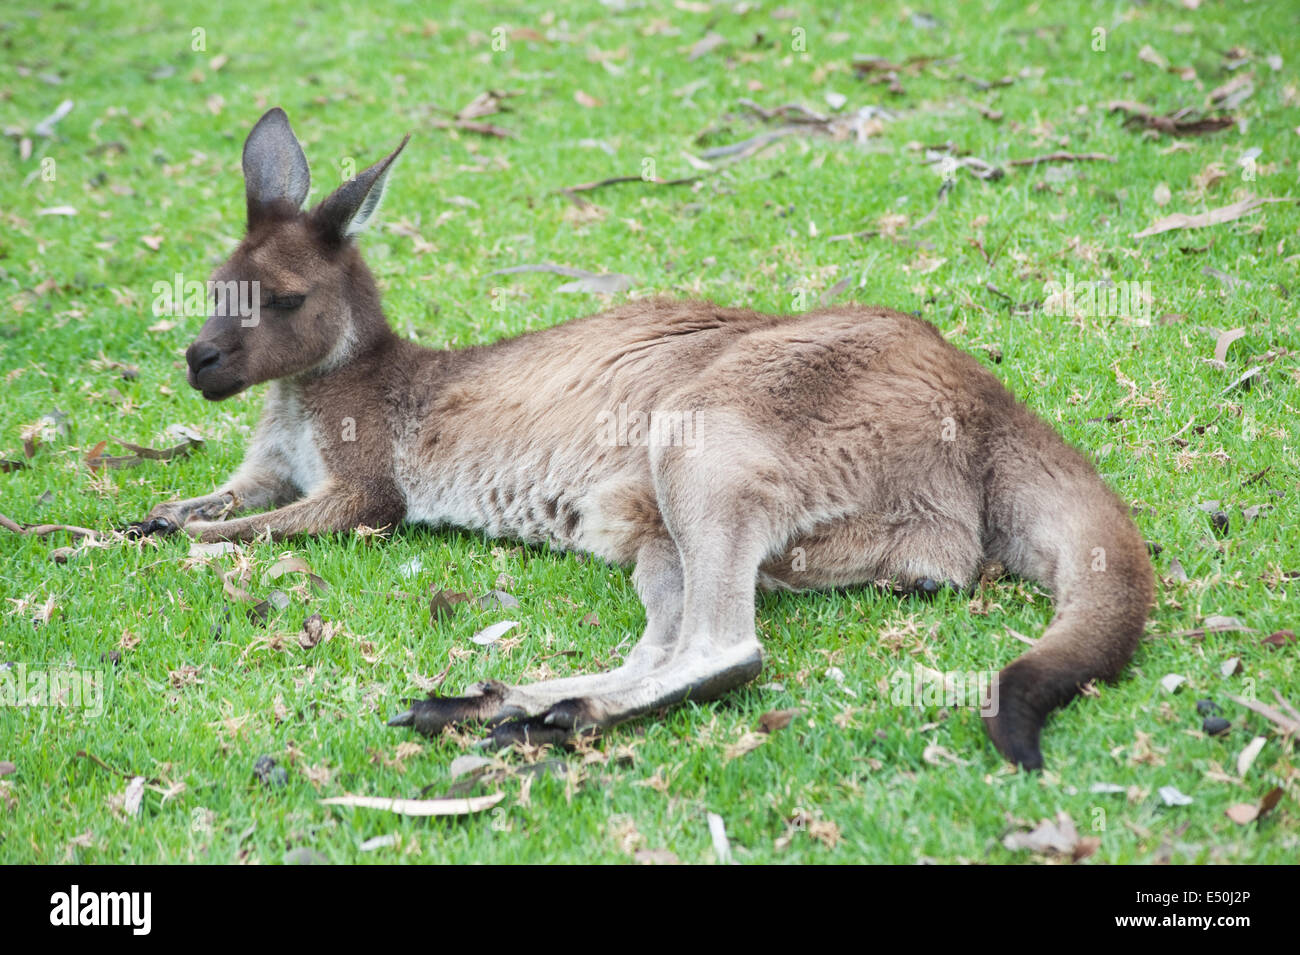 native Australian kangaroo Stock Photo